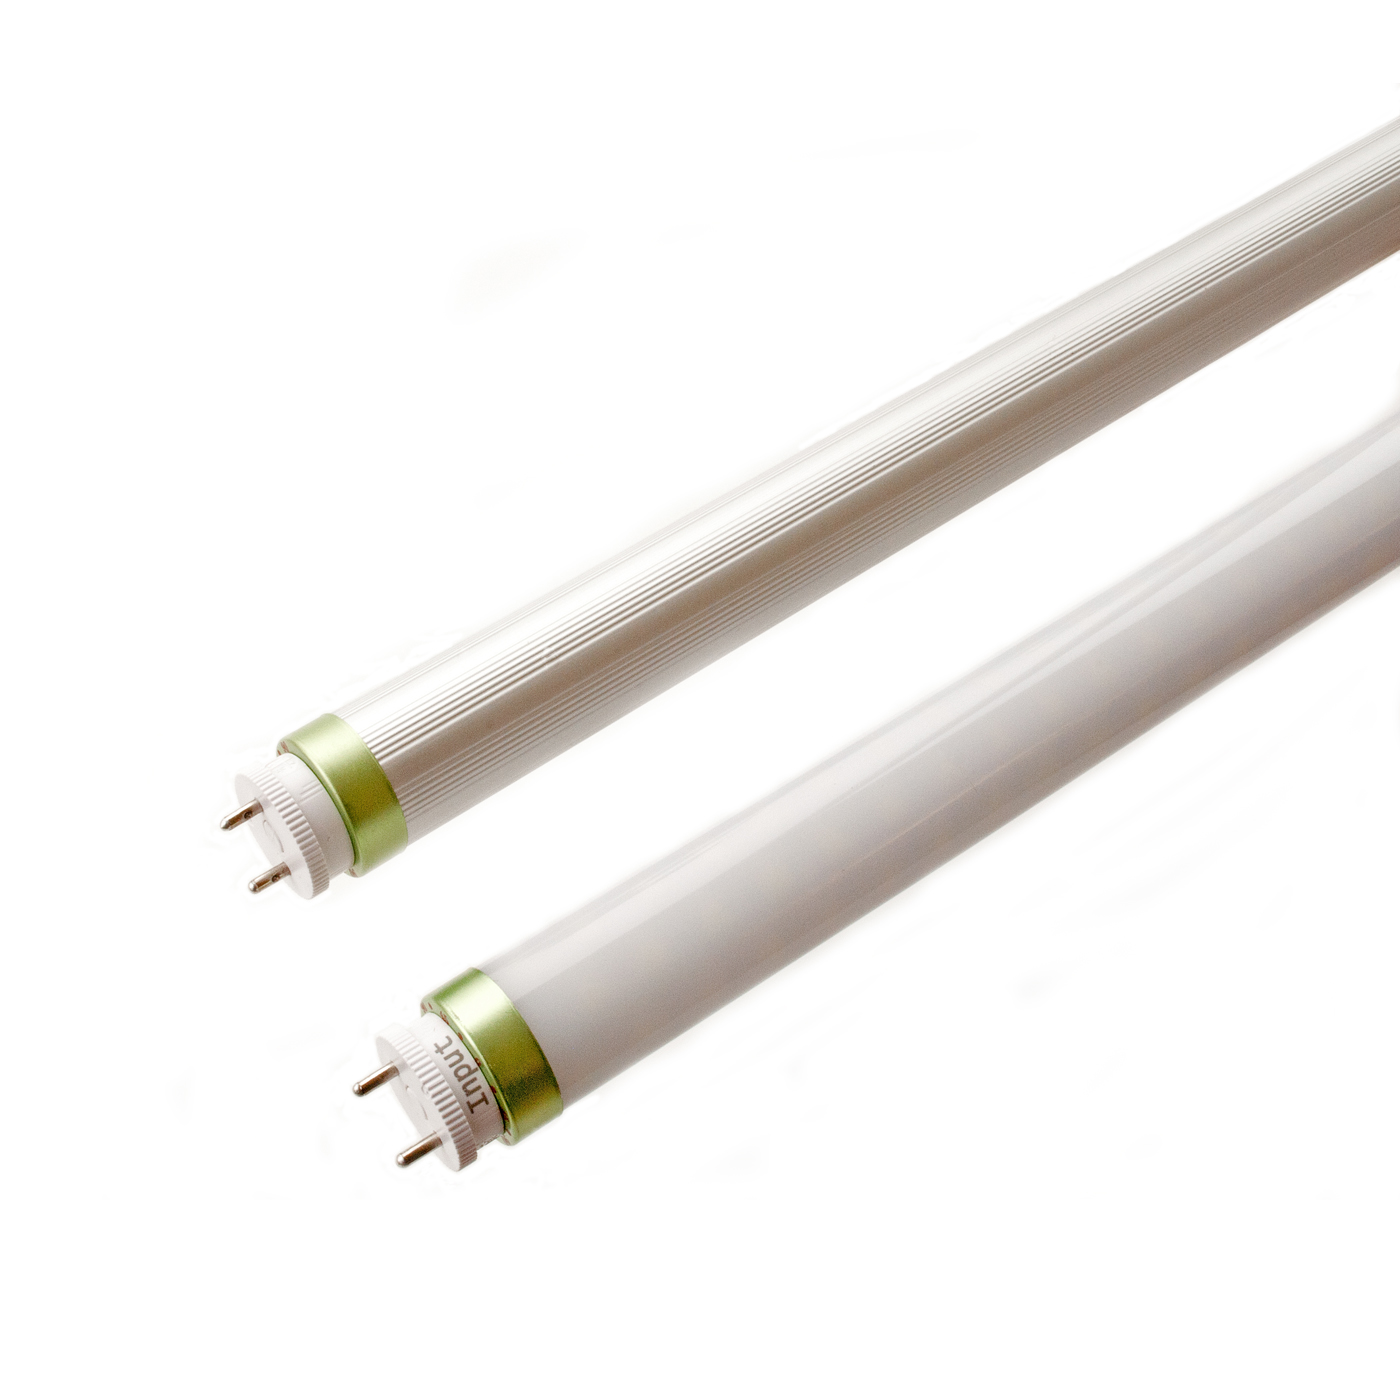 Tube LED T10 26W 150cm -220° SMD3528 orientable